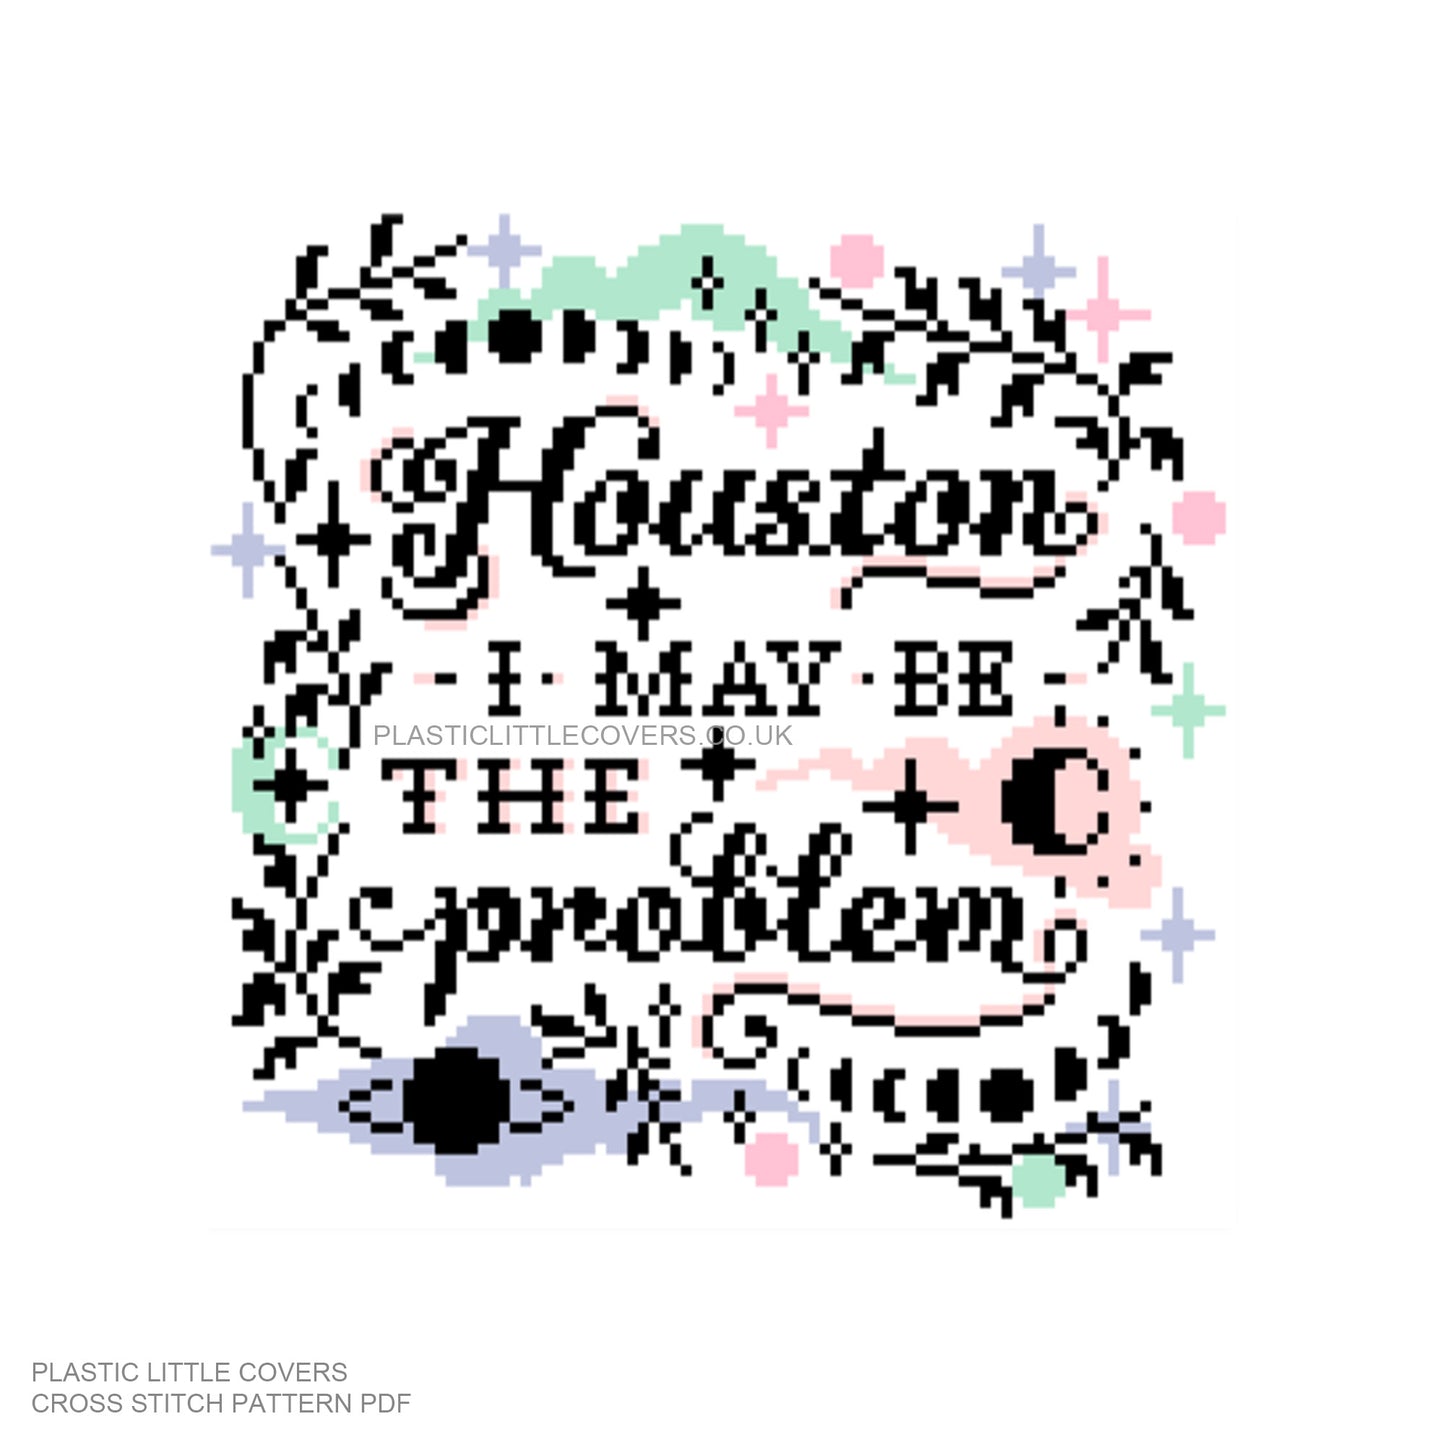 Houston I May Be the Problem - Cross Stitch Pattern PDF.